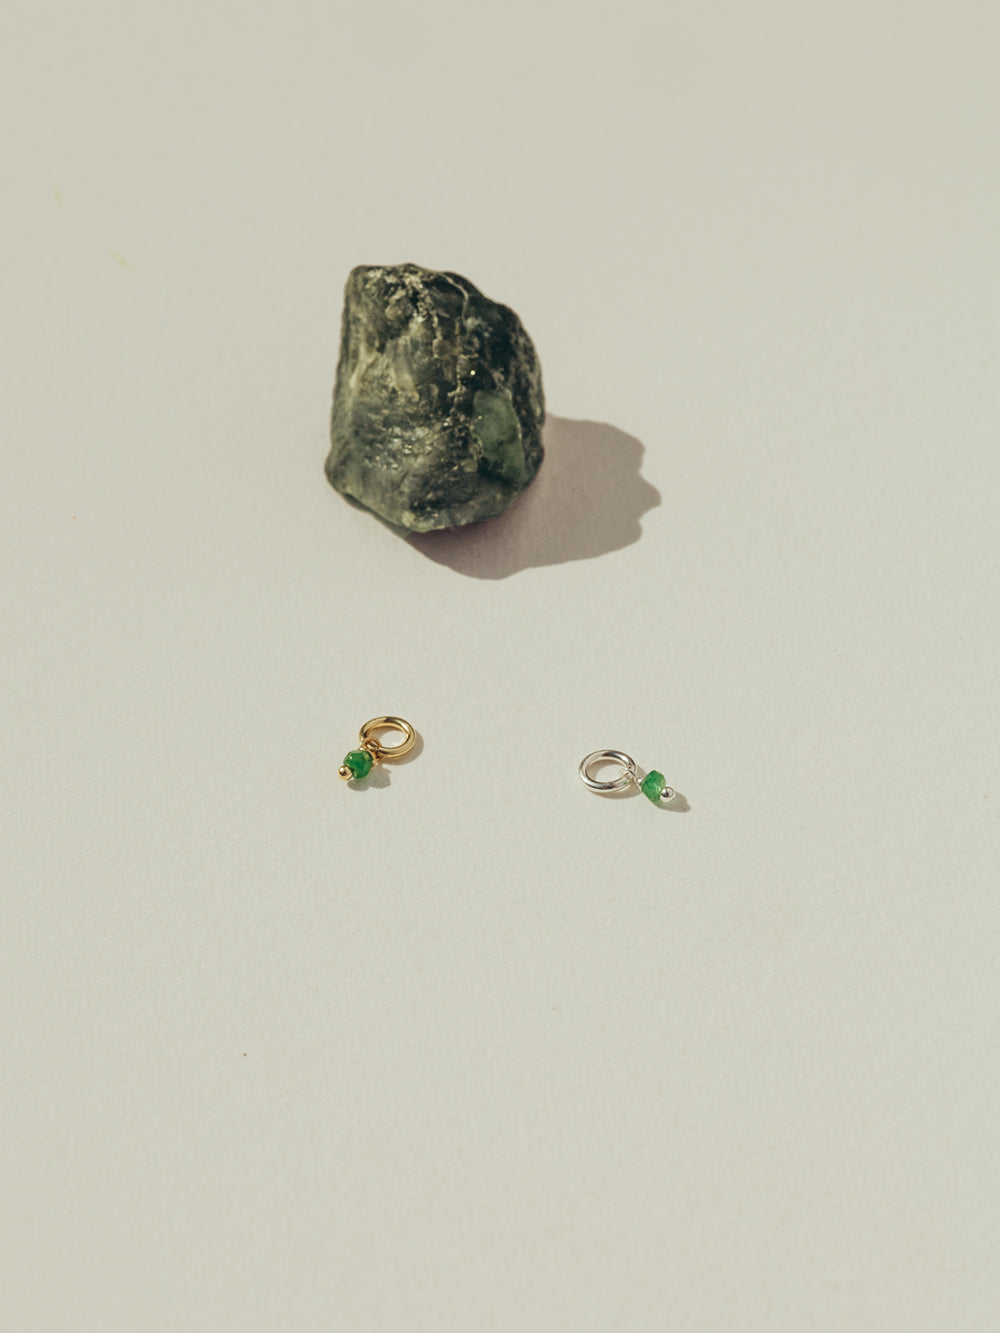 Birthstone May - Emerald | 925 Sterling Silver